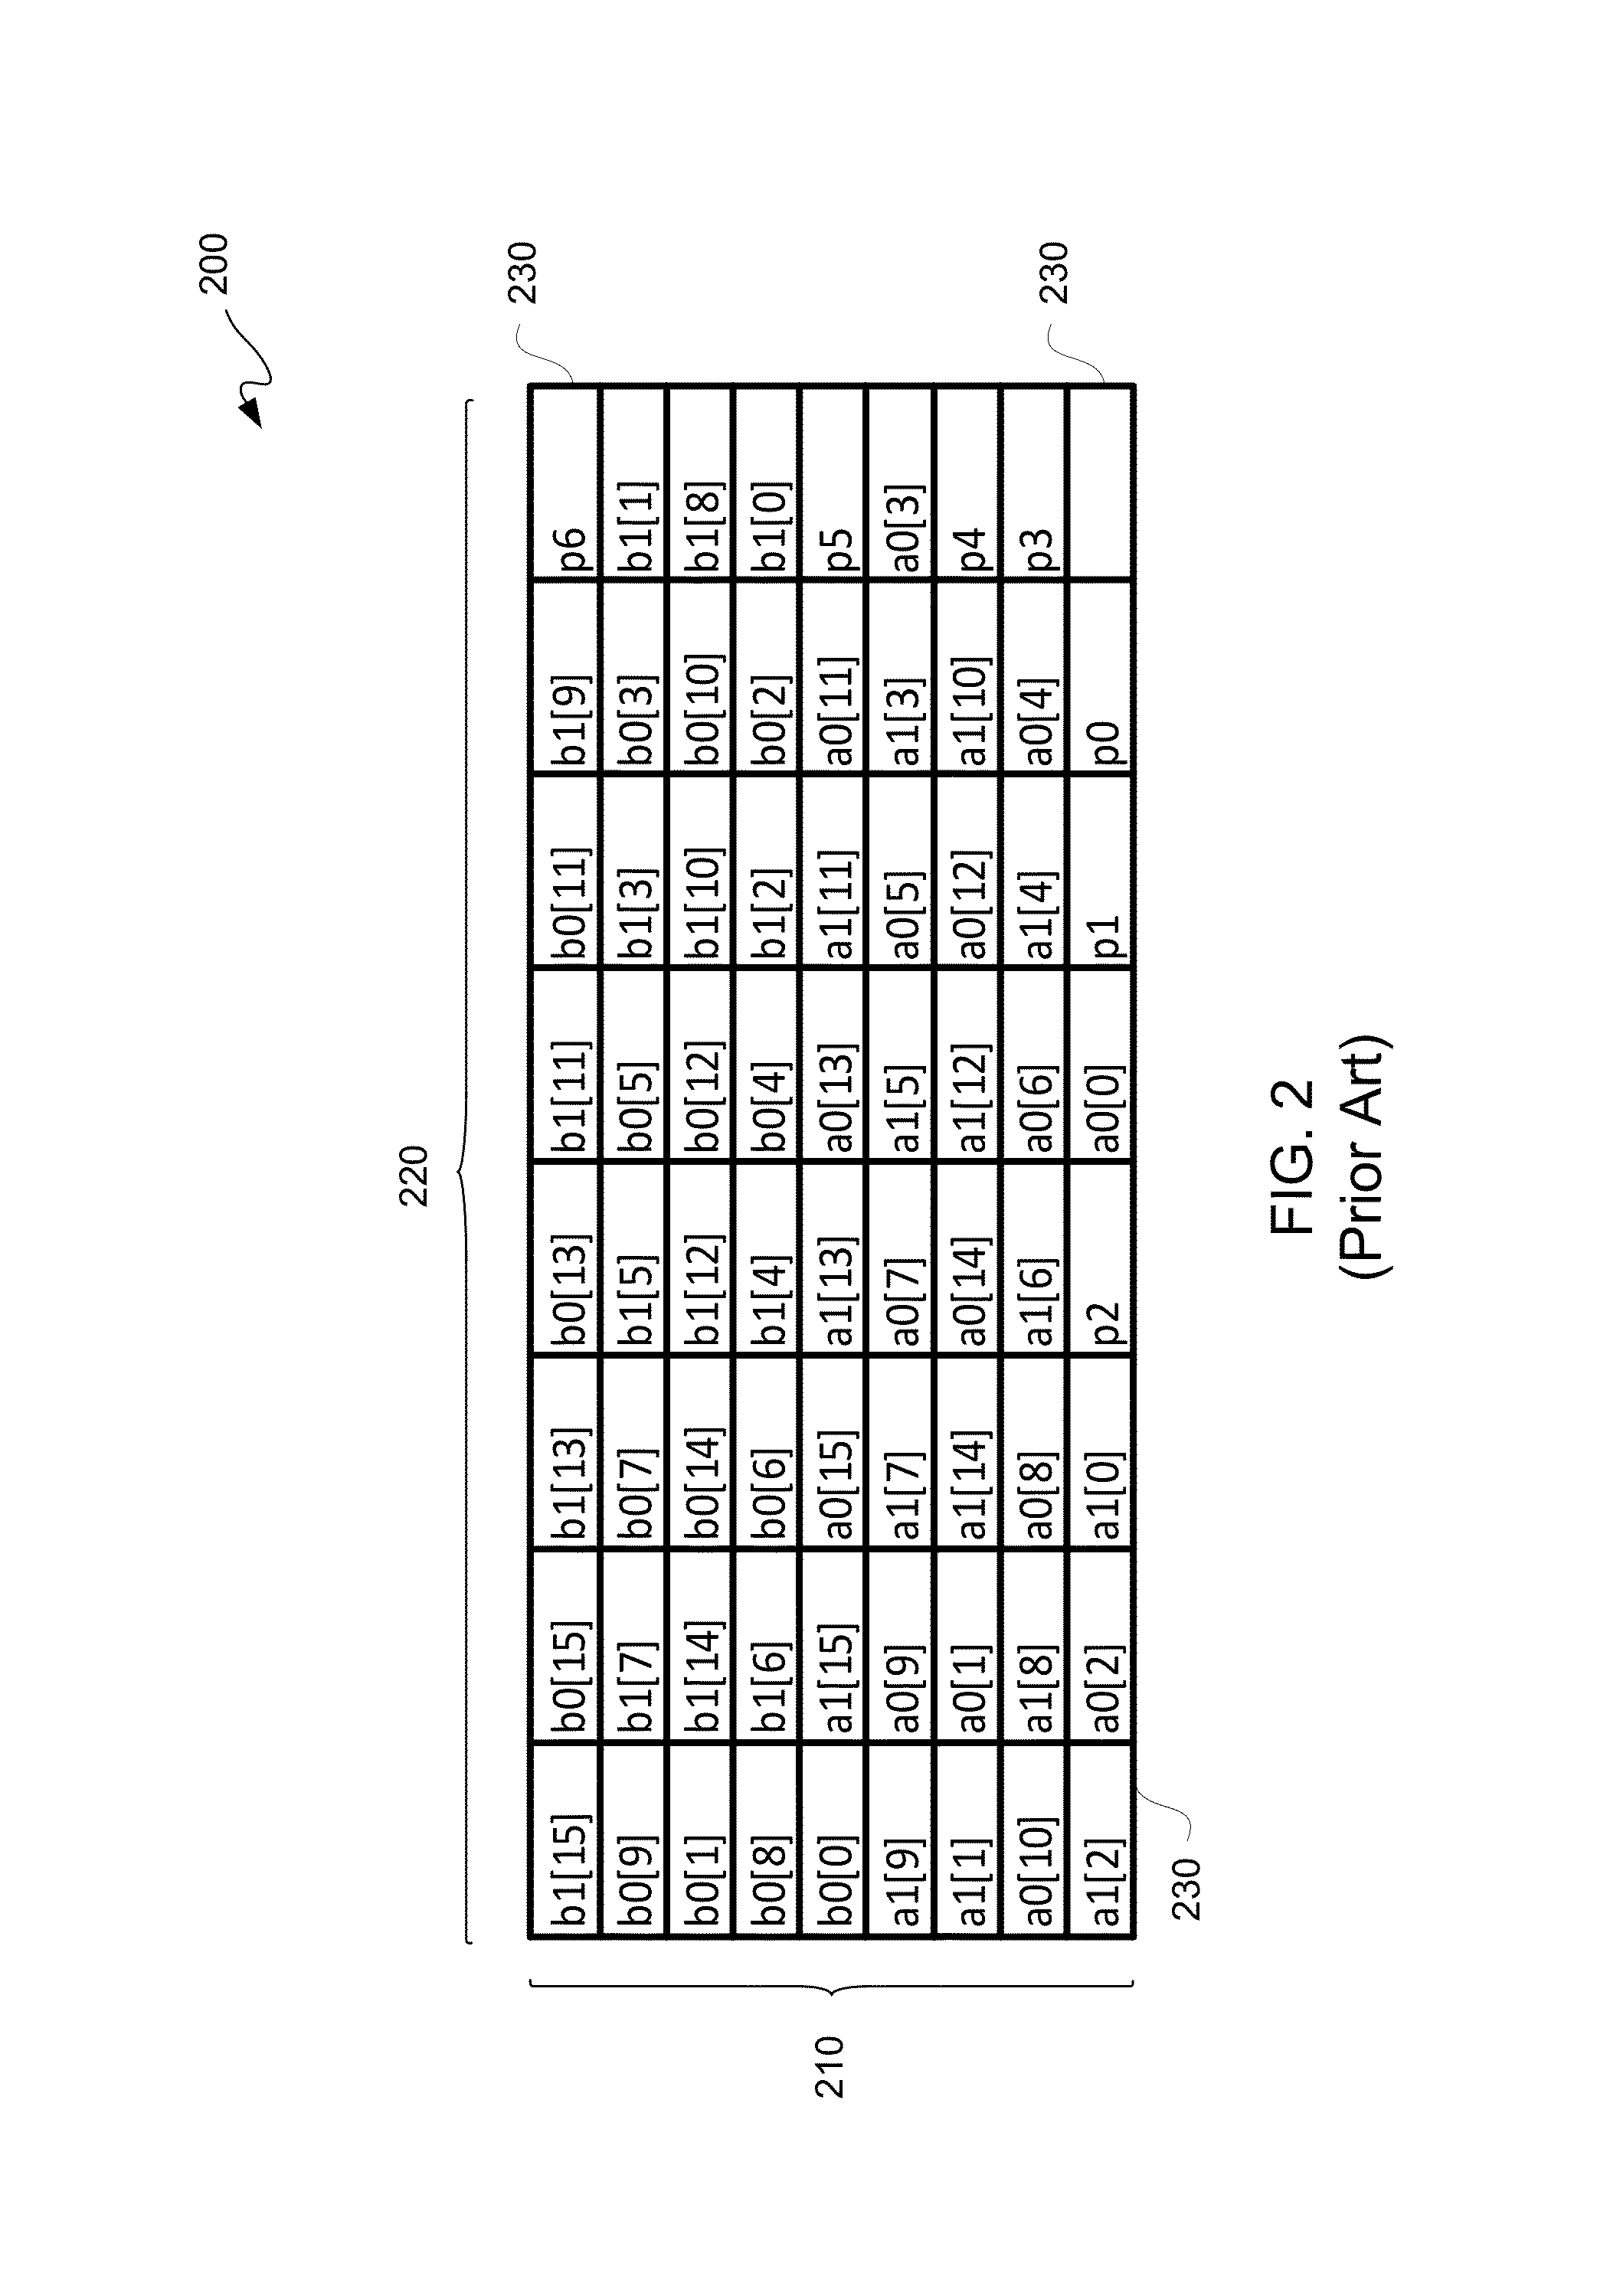 Encoding and decoding of information using a block code matrix